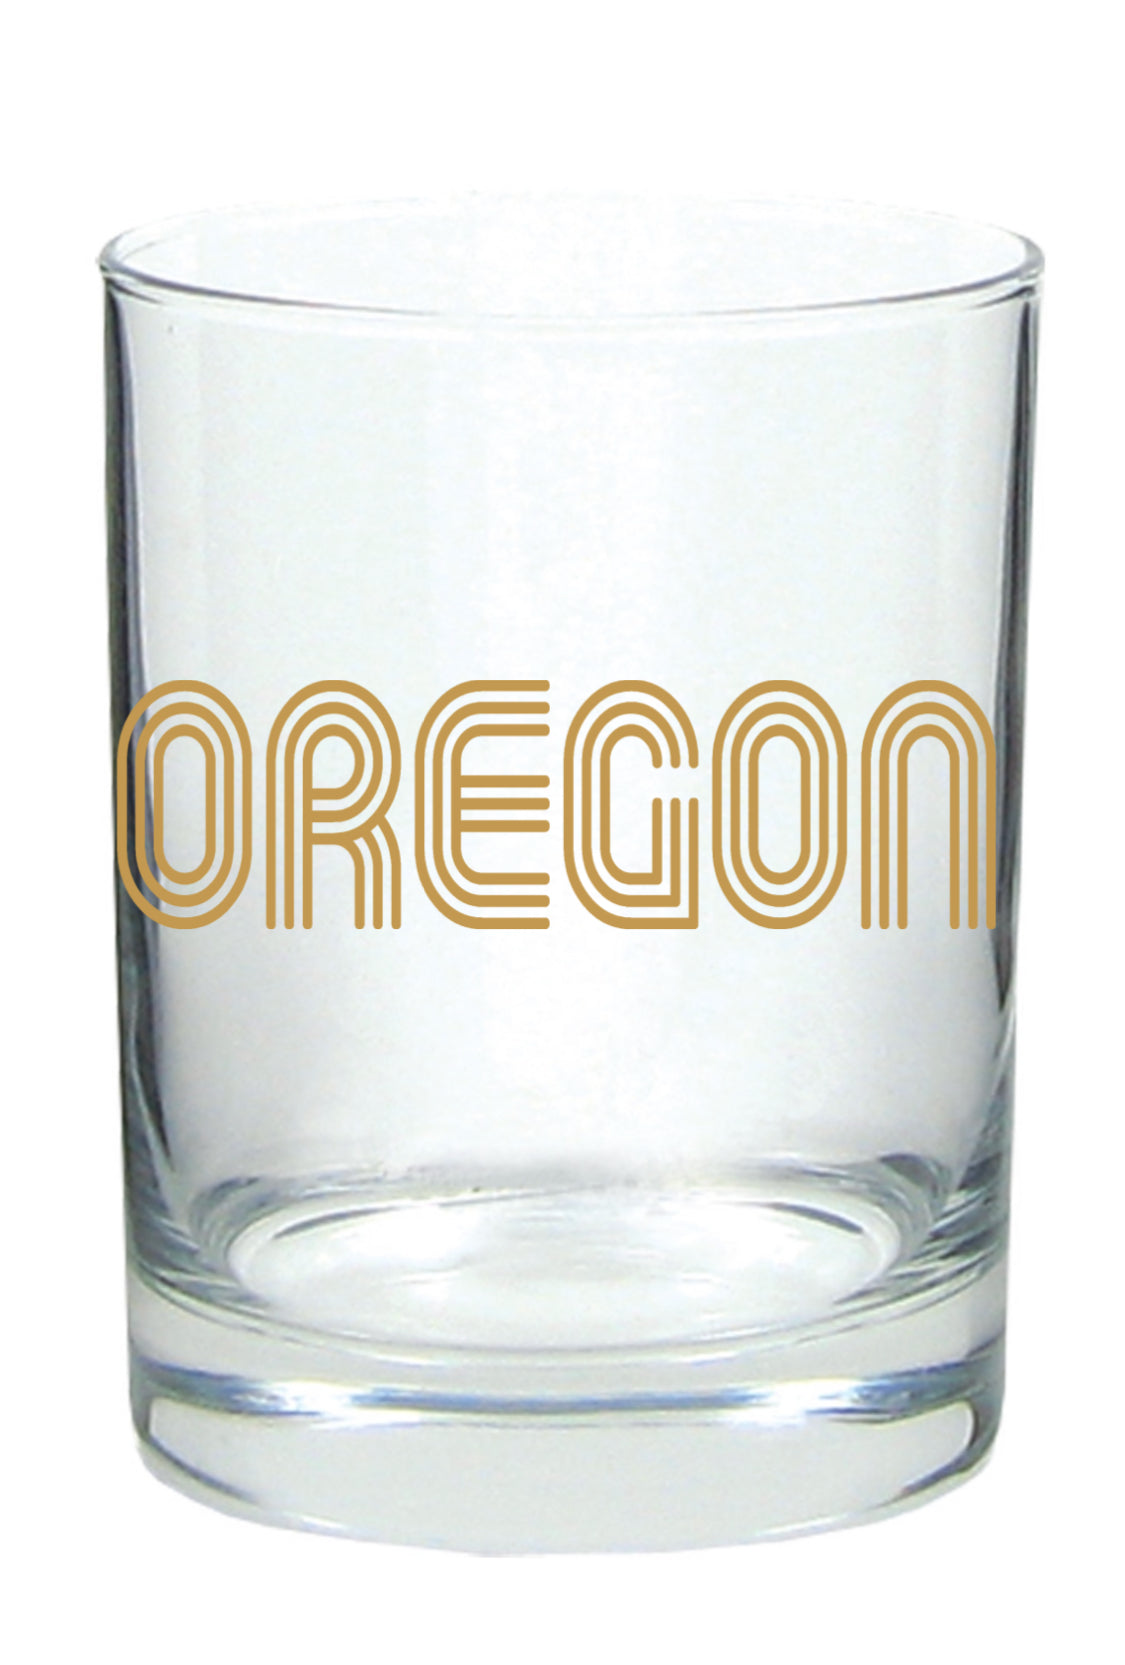 Oregon *Limited Edition* Rocks Glass